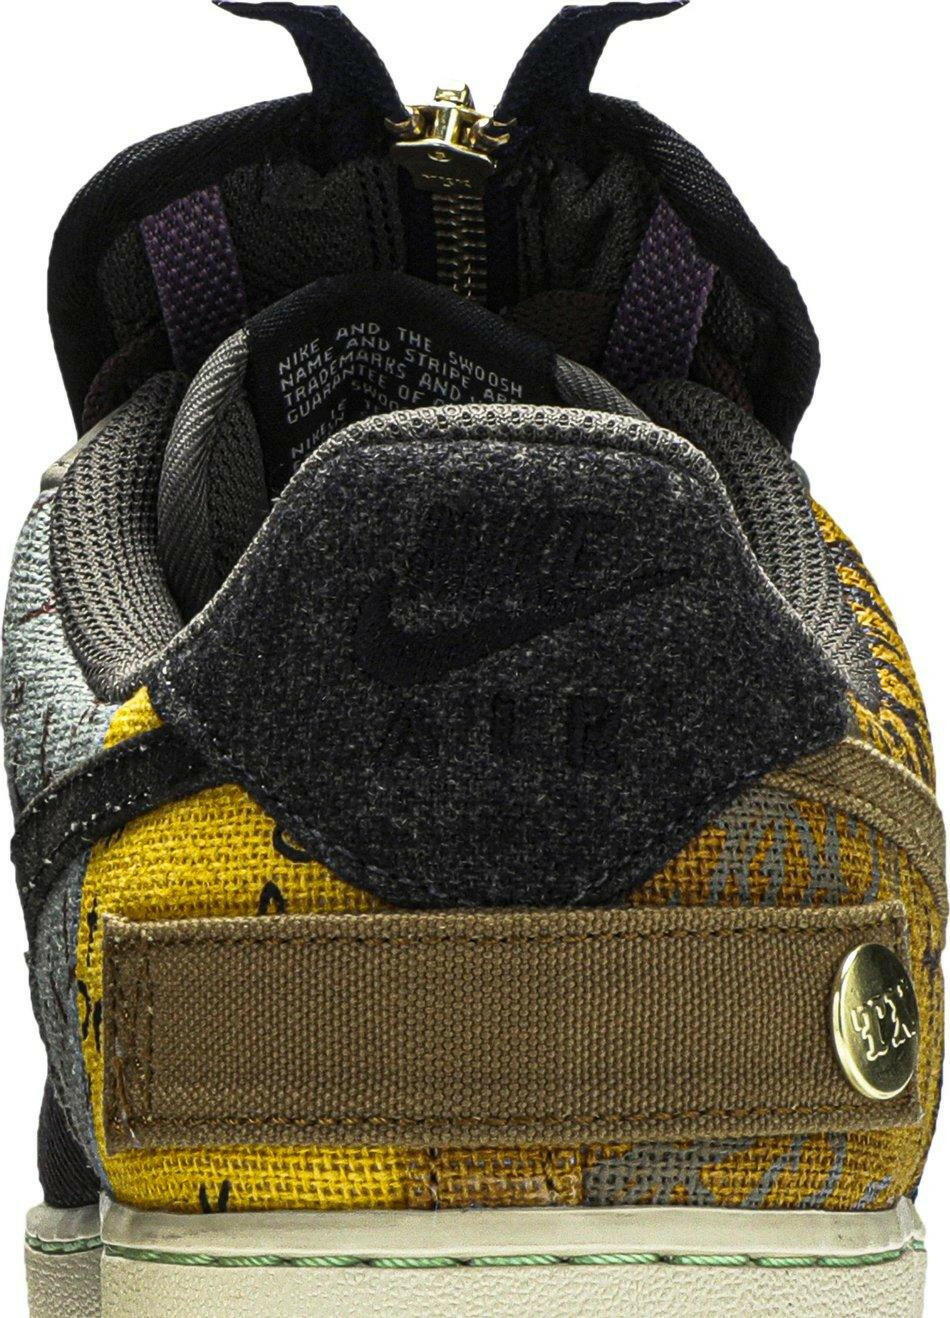 Nike Air Force 1 Low Travis Scott Cactus Jack (2019) Sneakers for Men - GENUINE AUTHENTIC BRAND LLC